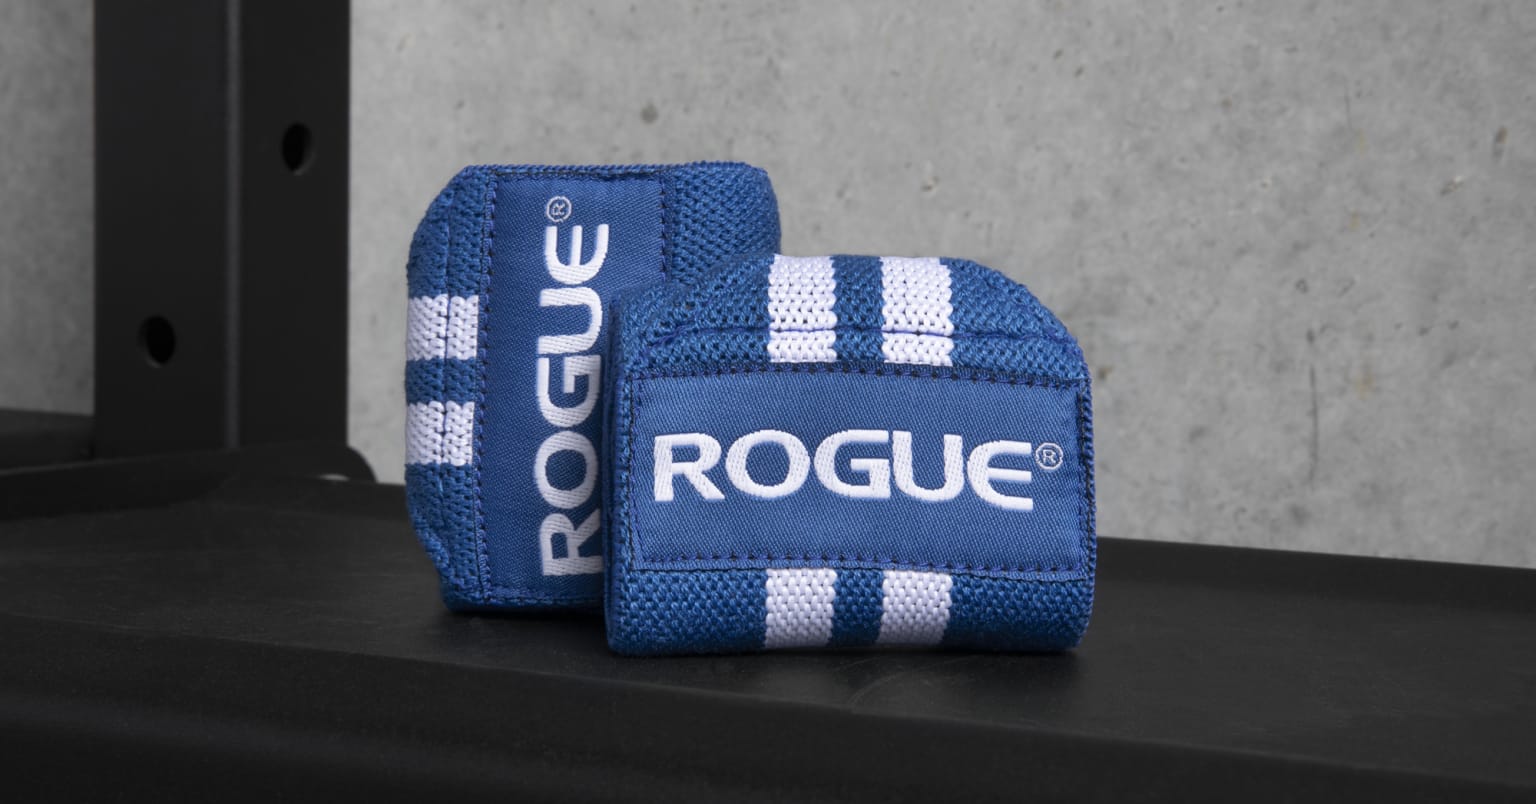 Rogue Wrist Wraps - Blue and White